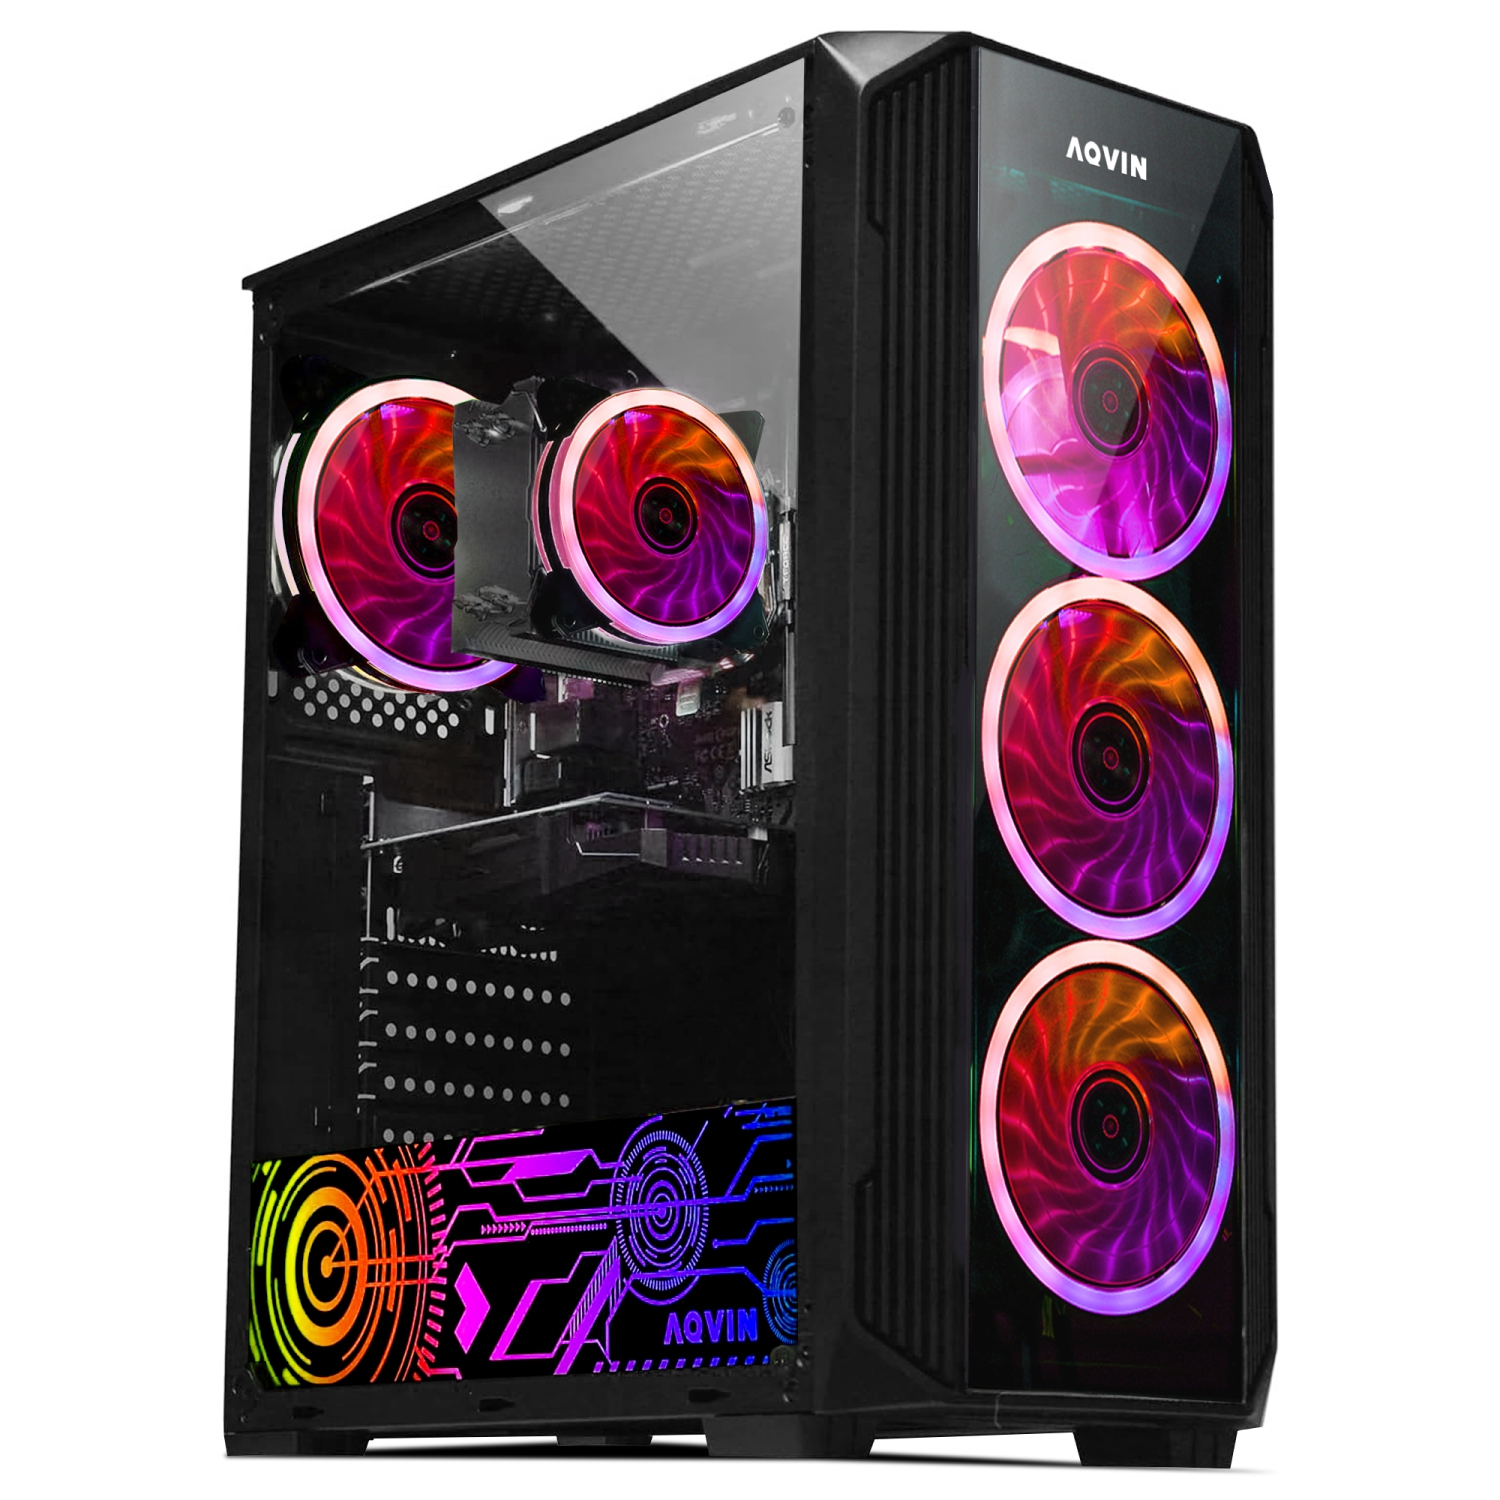 Refurbished (Excellent) - Gaming PC AQVIN ZForce Tower Desktop Computer - AMD Graphics RX 580 8GB GDDR5 HDMI (Intel Core i7 Processor/ New 2TB SSD/ 32GB DDR4 RAM/ Windows 10 Pro)